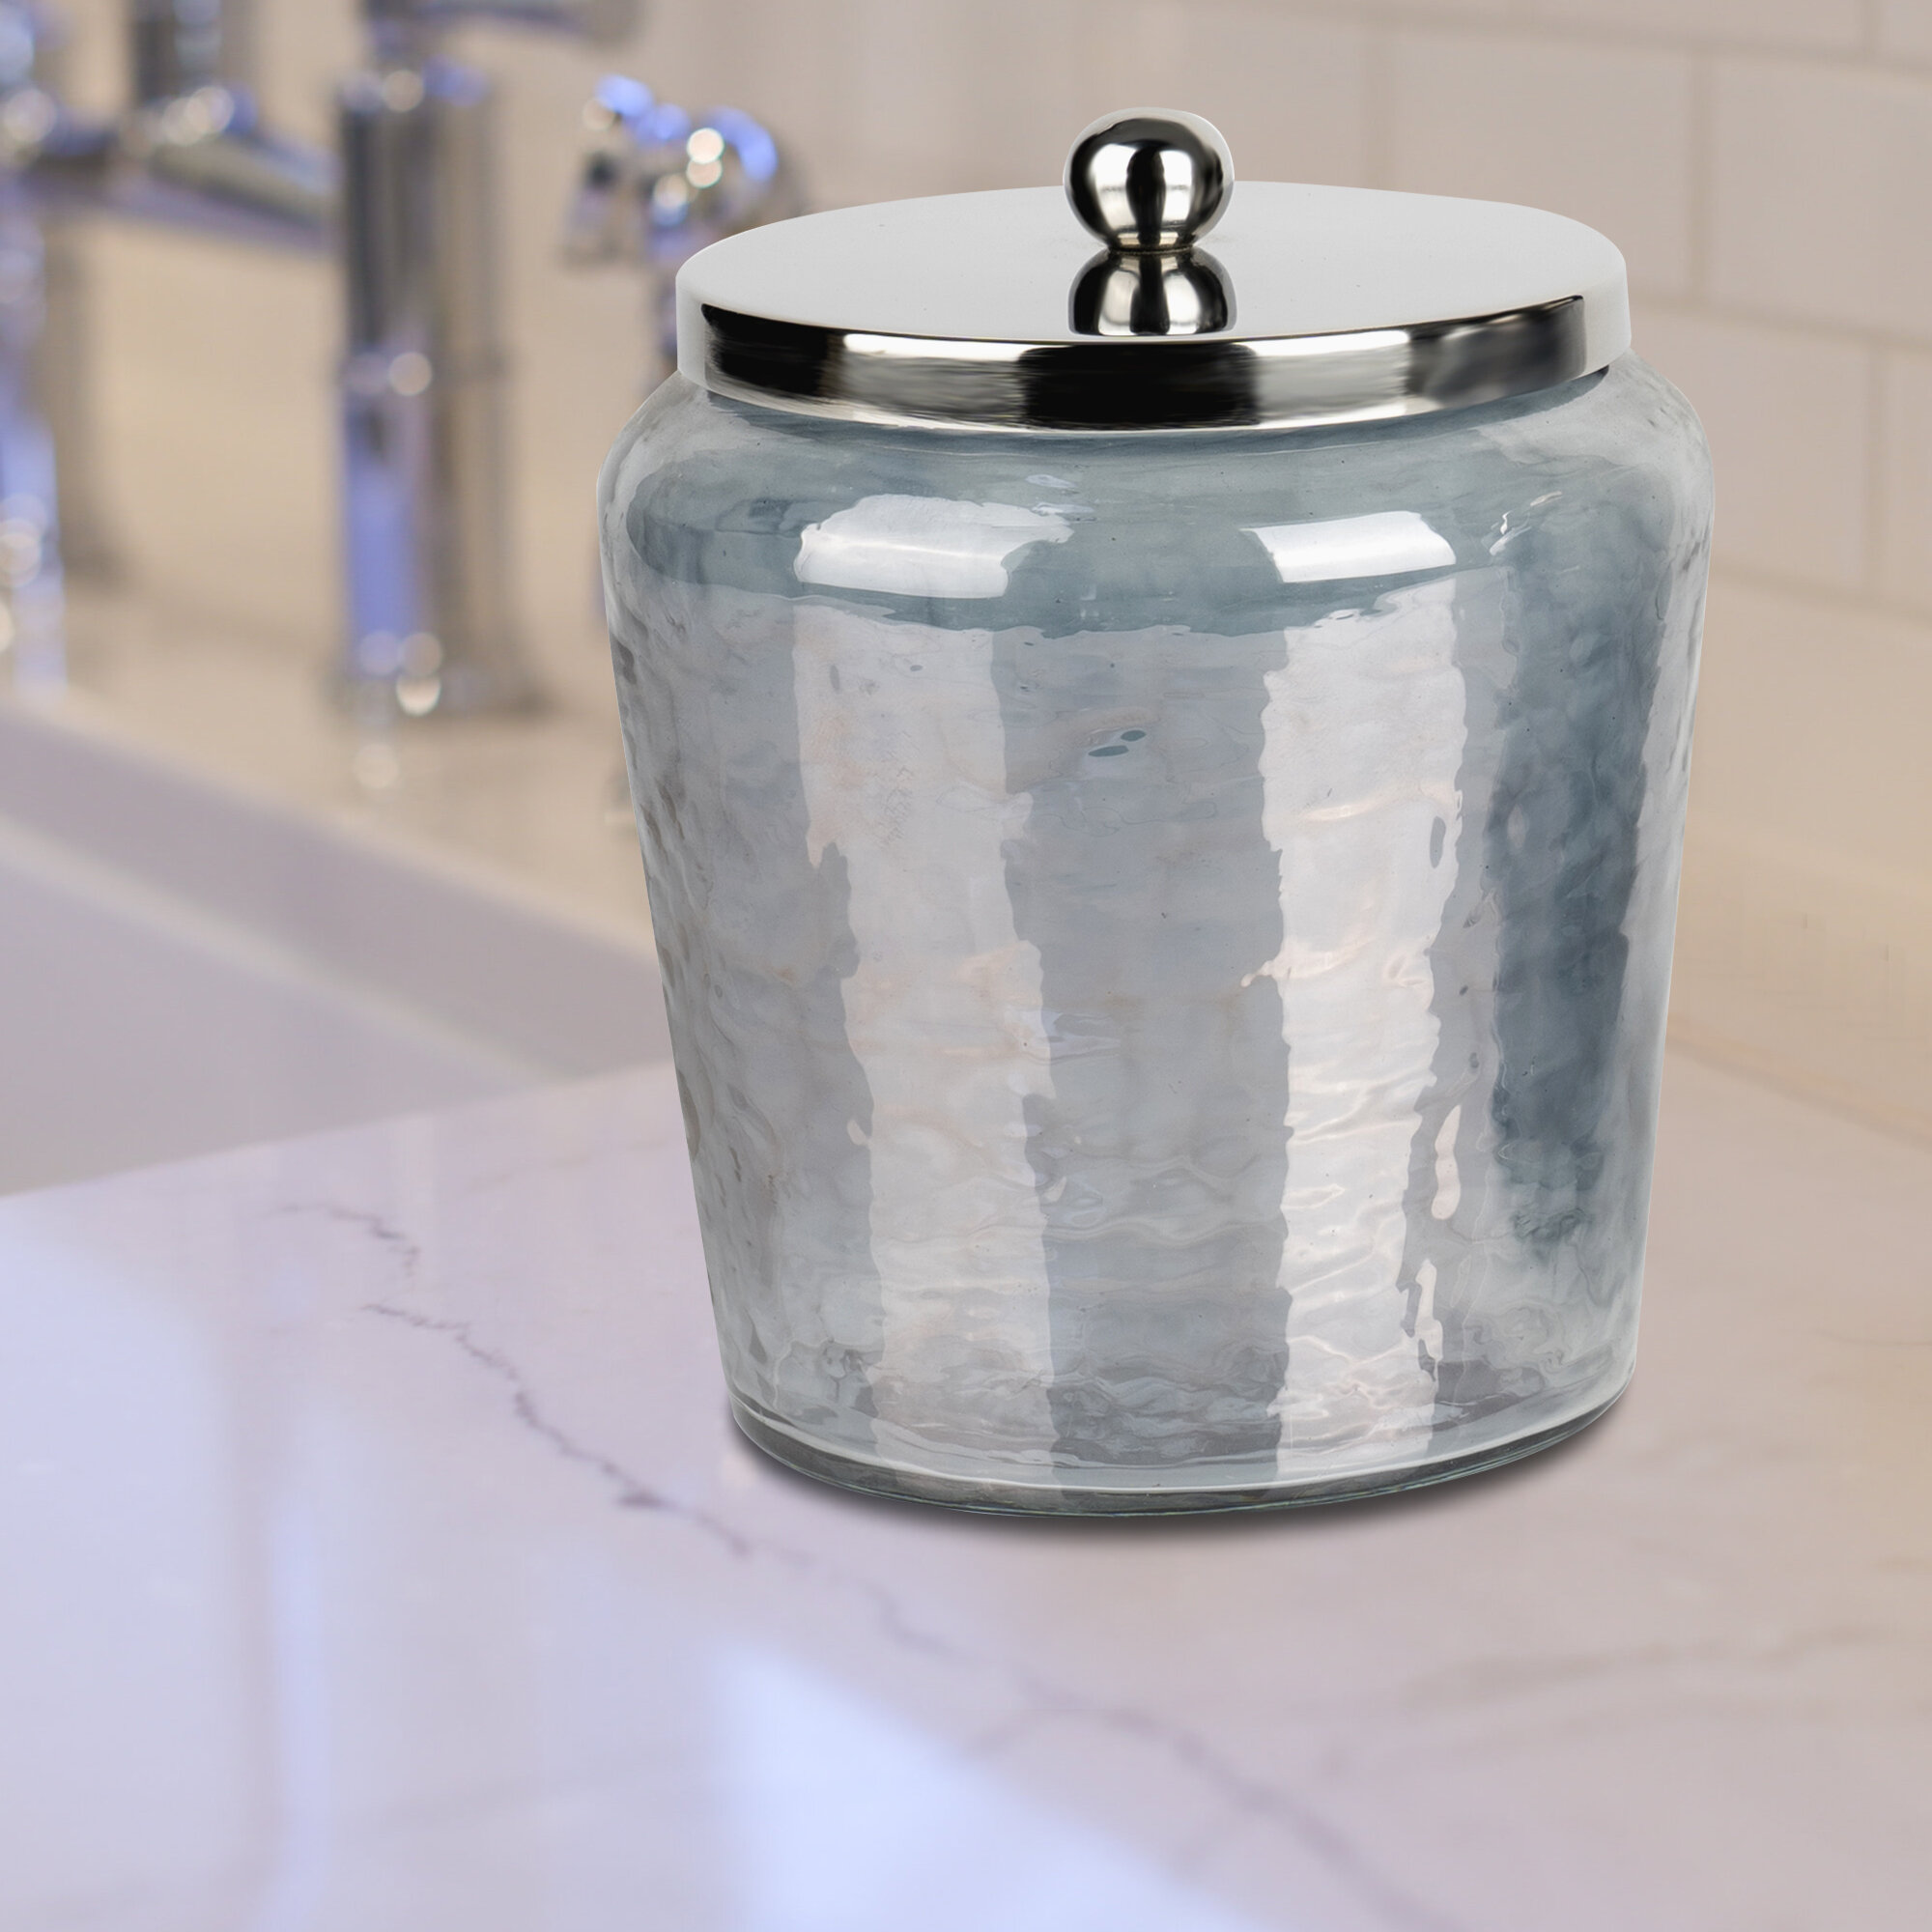 Classic Glass Bathroom Canisters  Bathroom canisters, Glass canisters,  Glass bathroom